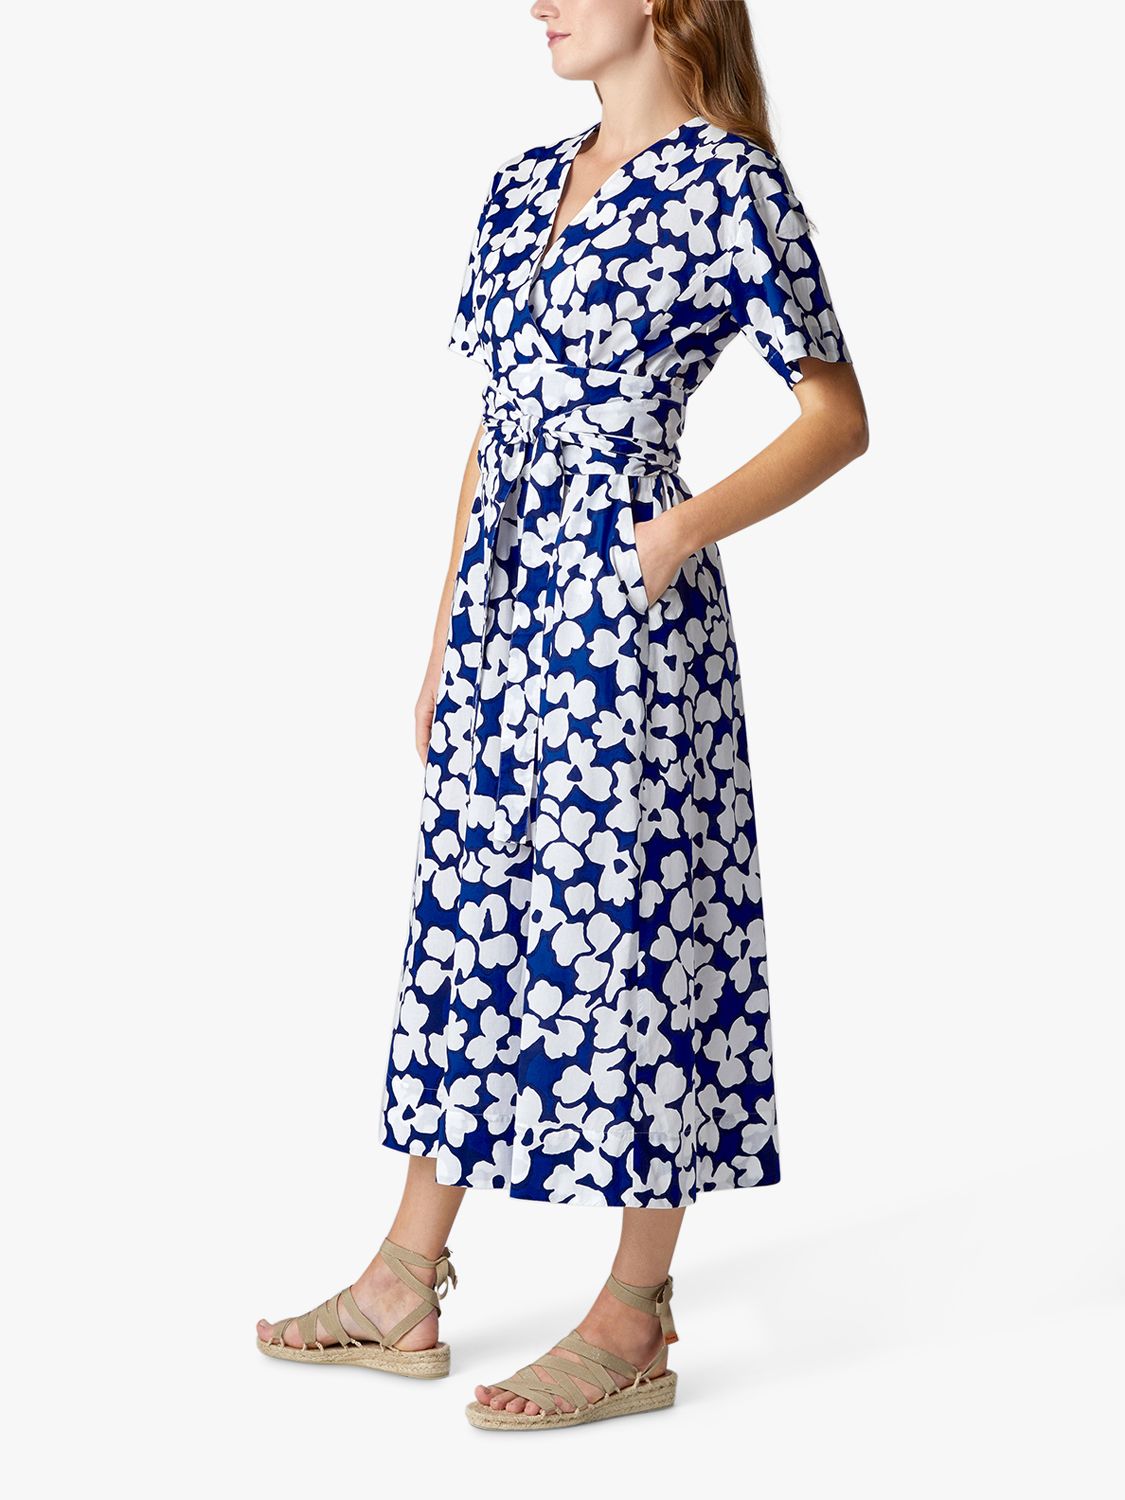 Jasper Conran London Floral Midi Wrap Dress, Blue at John Lewis & Partners